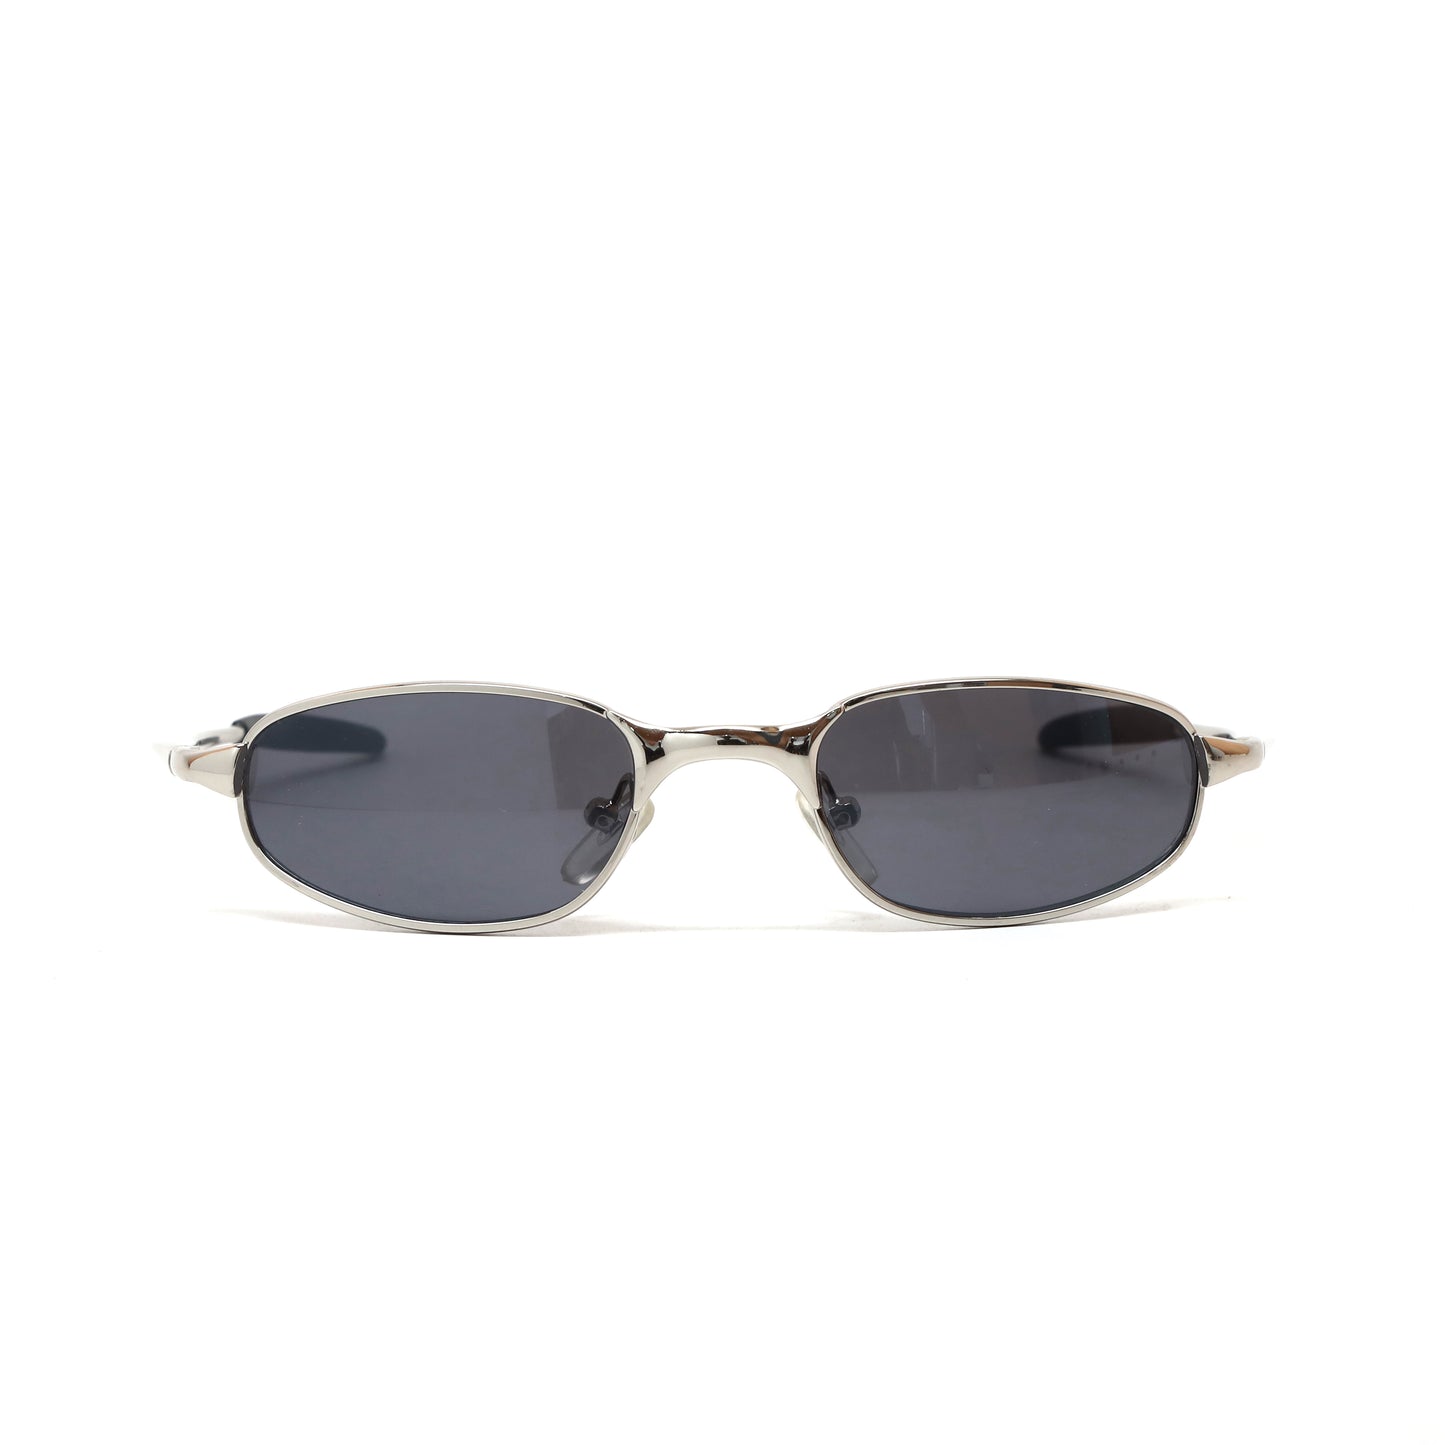 Vintage Small Size 90s Matrix Style Sunglasses - Chrome